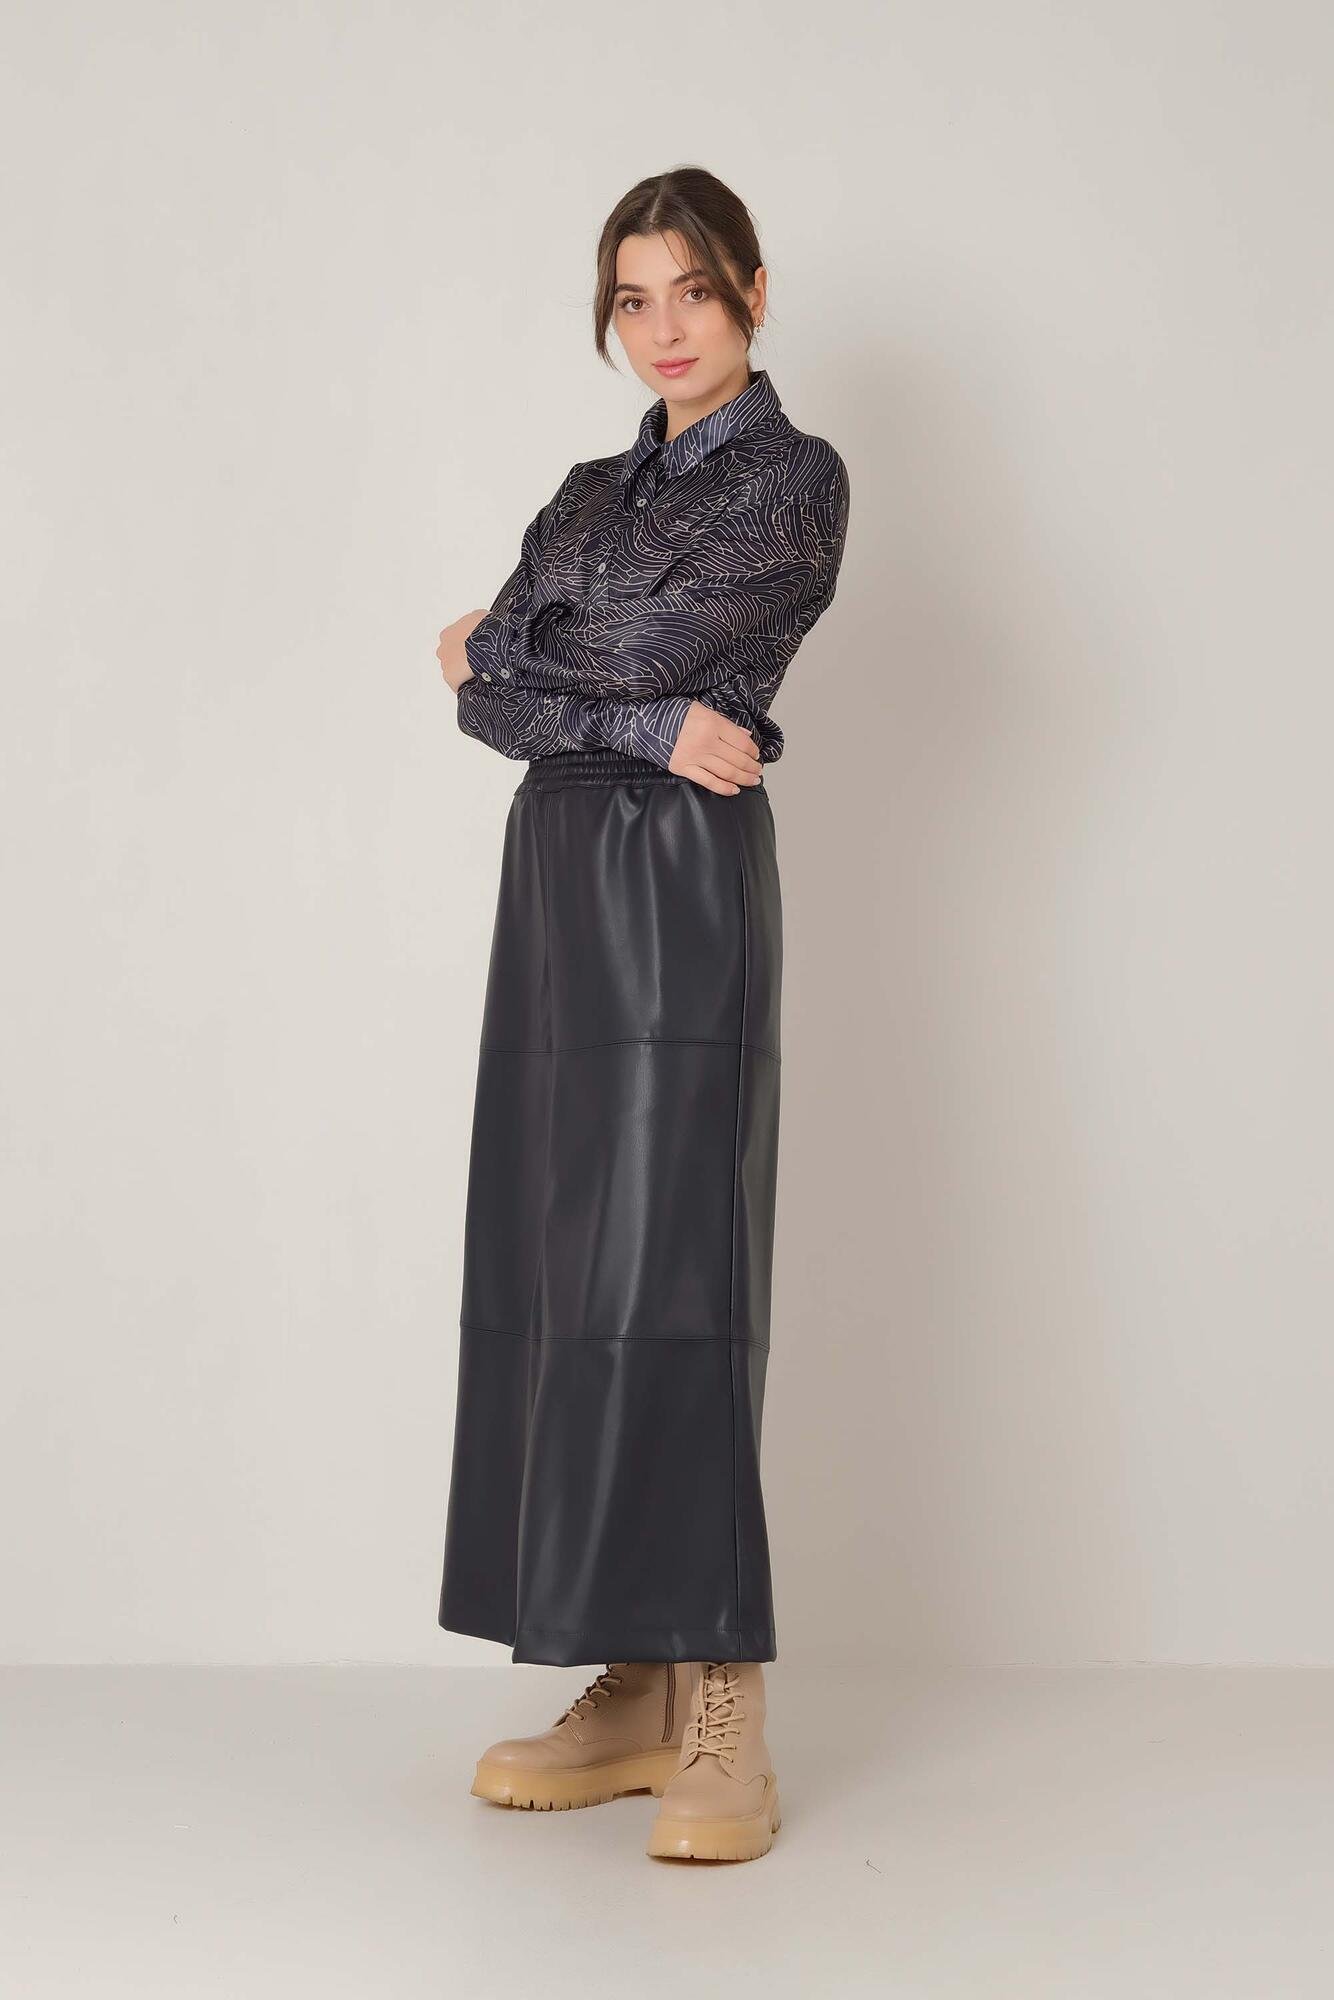 Leather skirt navy lacivert